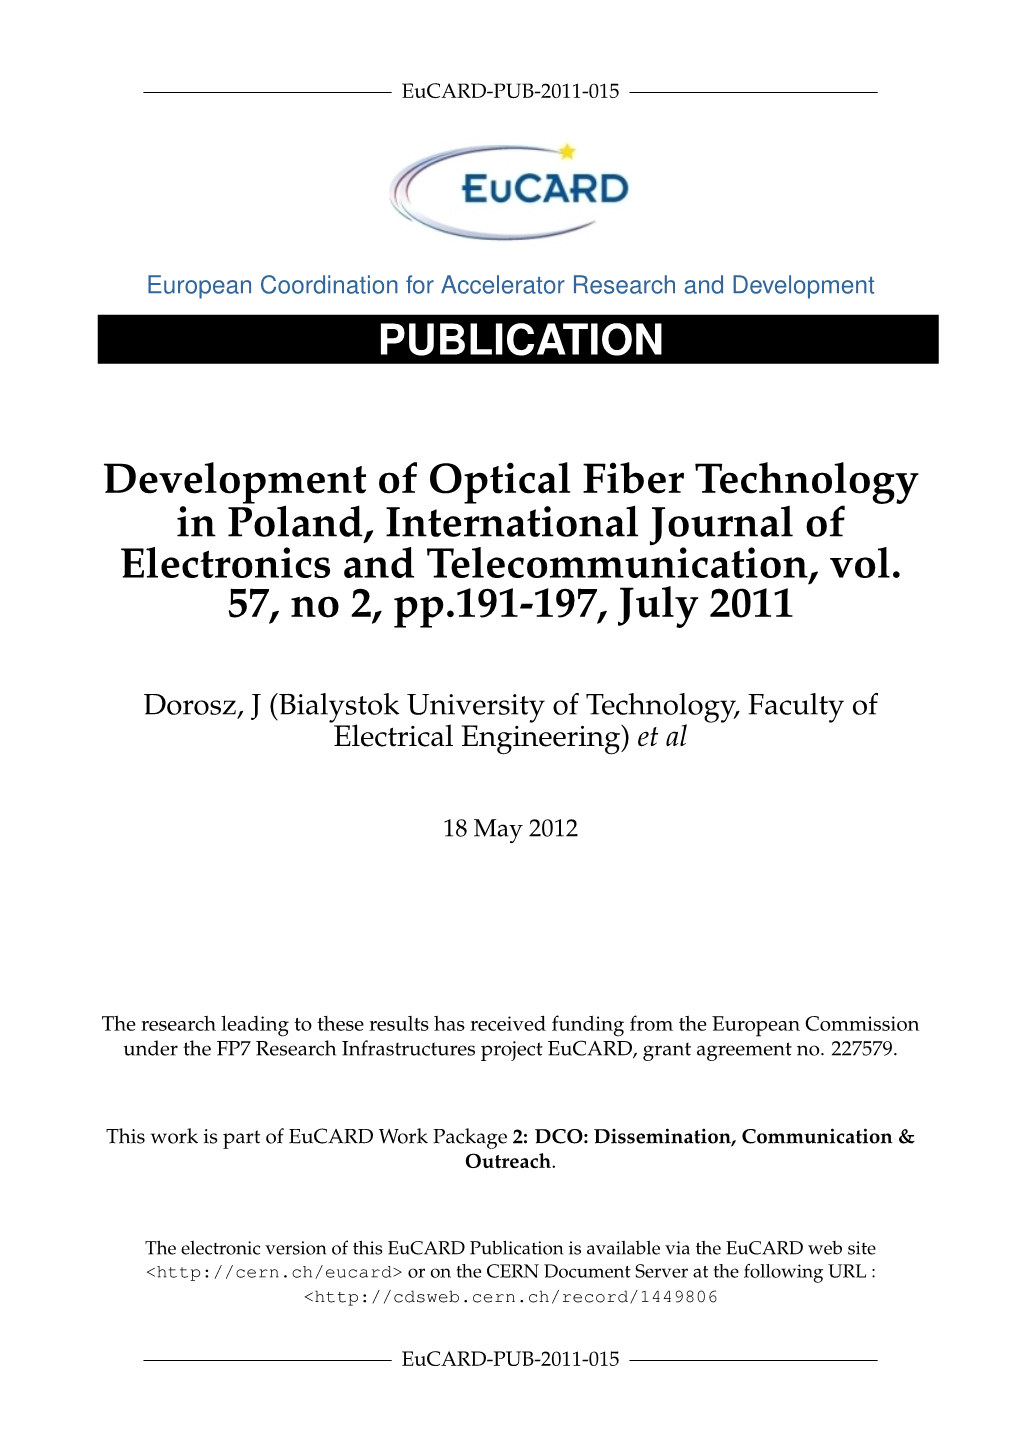 Development of Optical Fiber Technology in Poland, International Journal of Electronics and Telecommunication, Vol